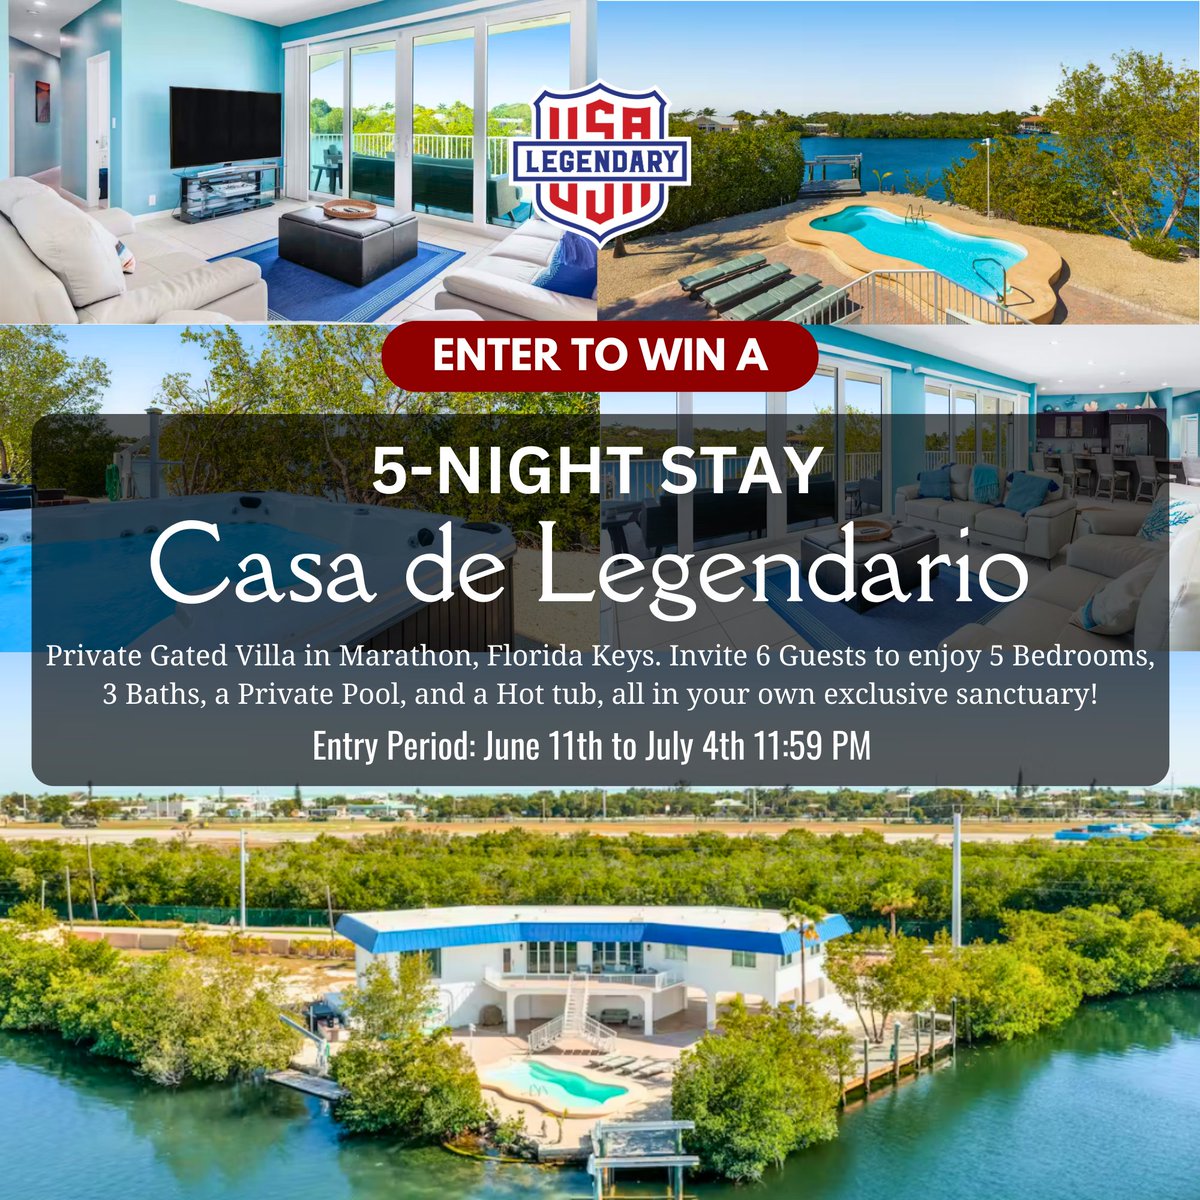 Enter to Win A 5 Night Stay at 'Casa de Legendario' in Marathon, Florida Keys legendaryusa.com/pages/win-a-5-… #LegendaryUSA #GiveawayAlert